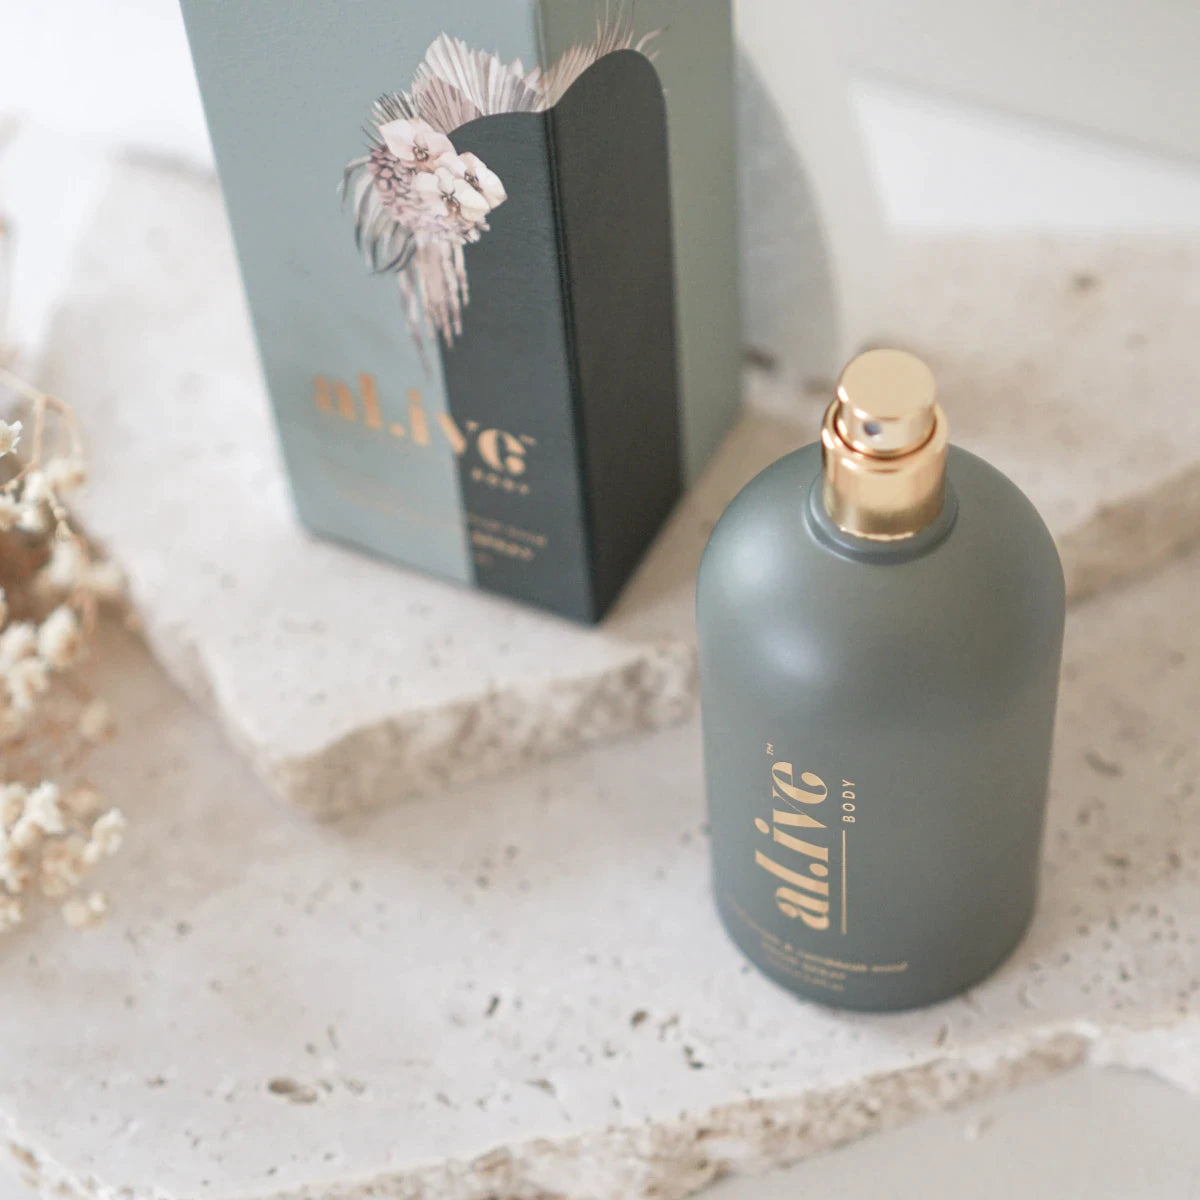 al.ive body | Luxury Room Spray (Assorted Fragrances)